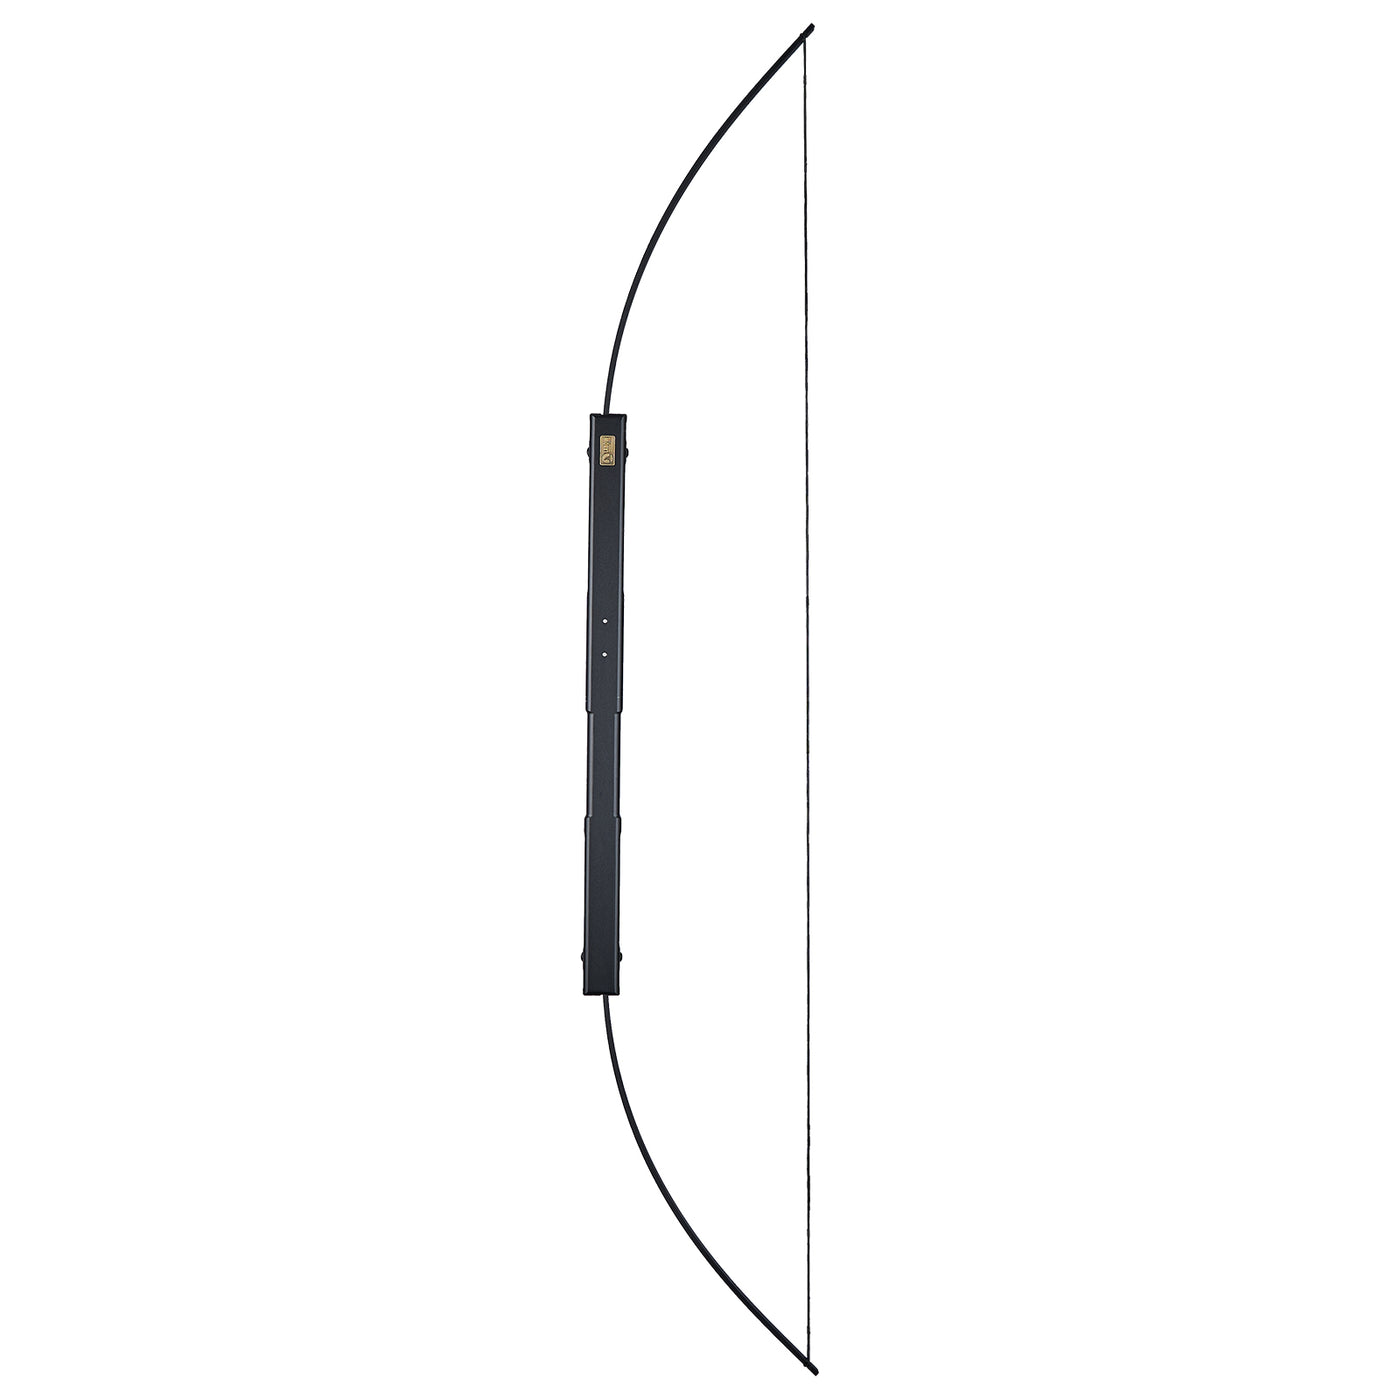 60 CFSB Compact Folding Survival Archery Bow Takedown Portable Outdoo –